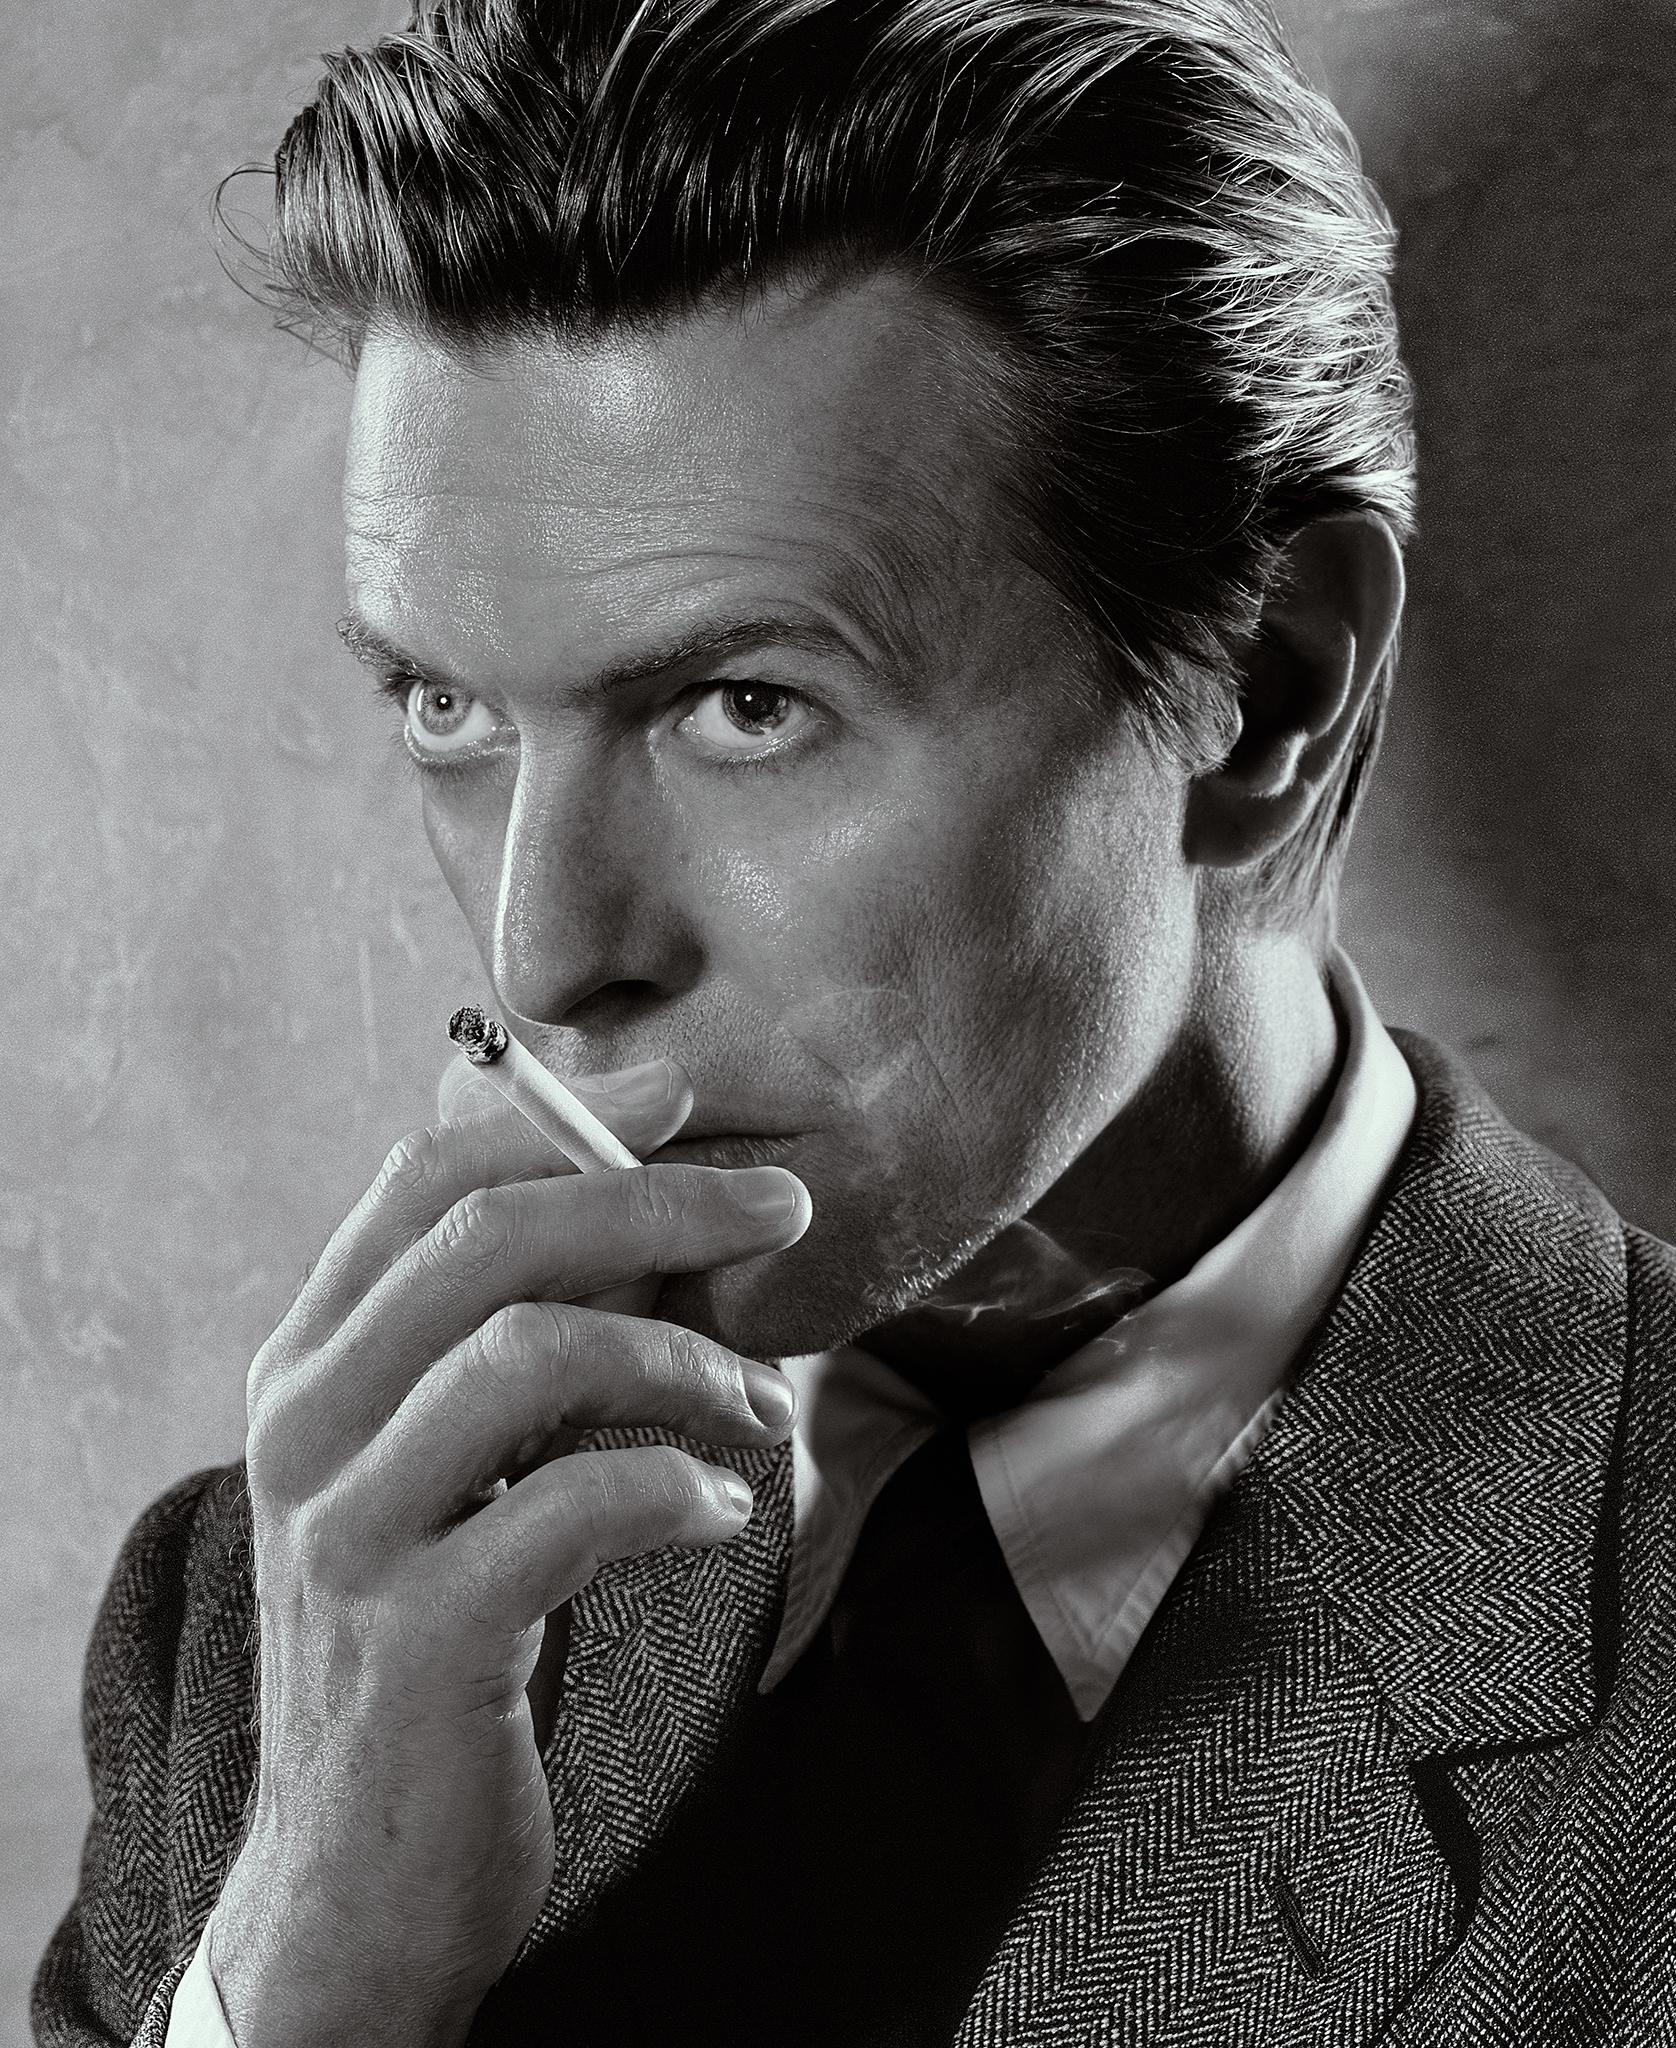 David Bowie "Smoking" Photo, Signed Lt'd Ed  by Markus Klinko - Ships Free